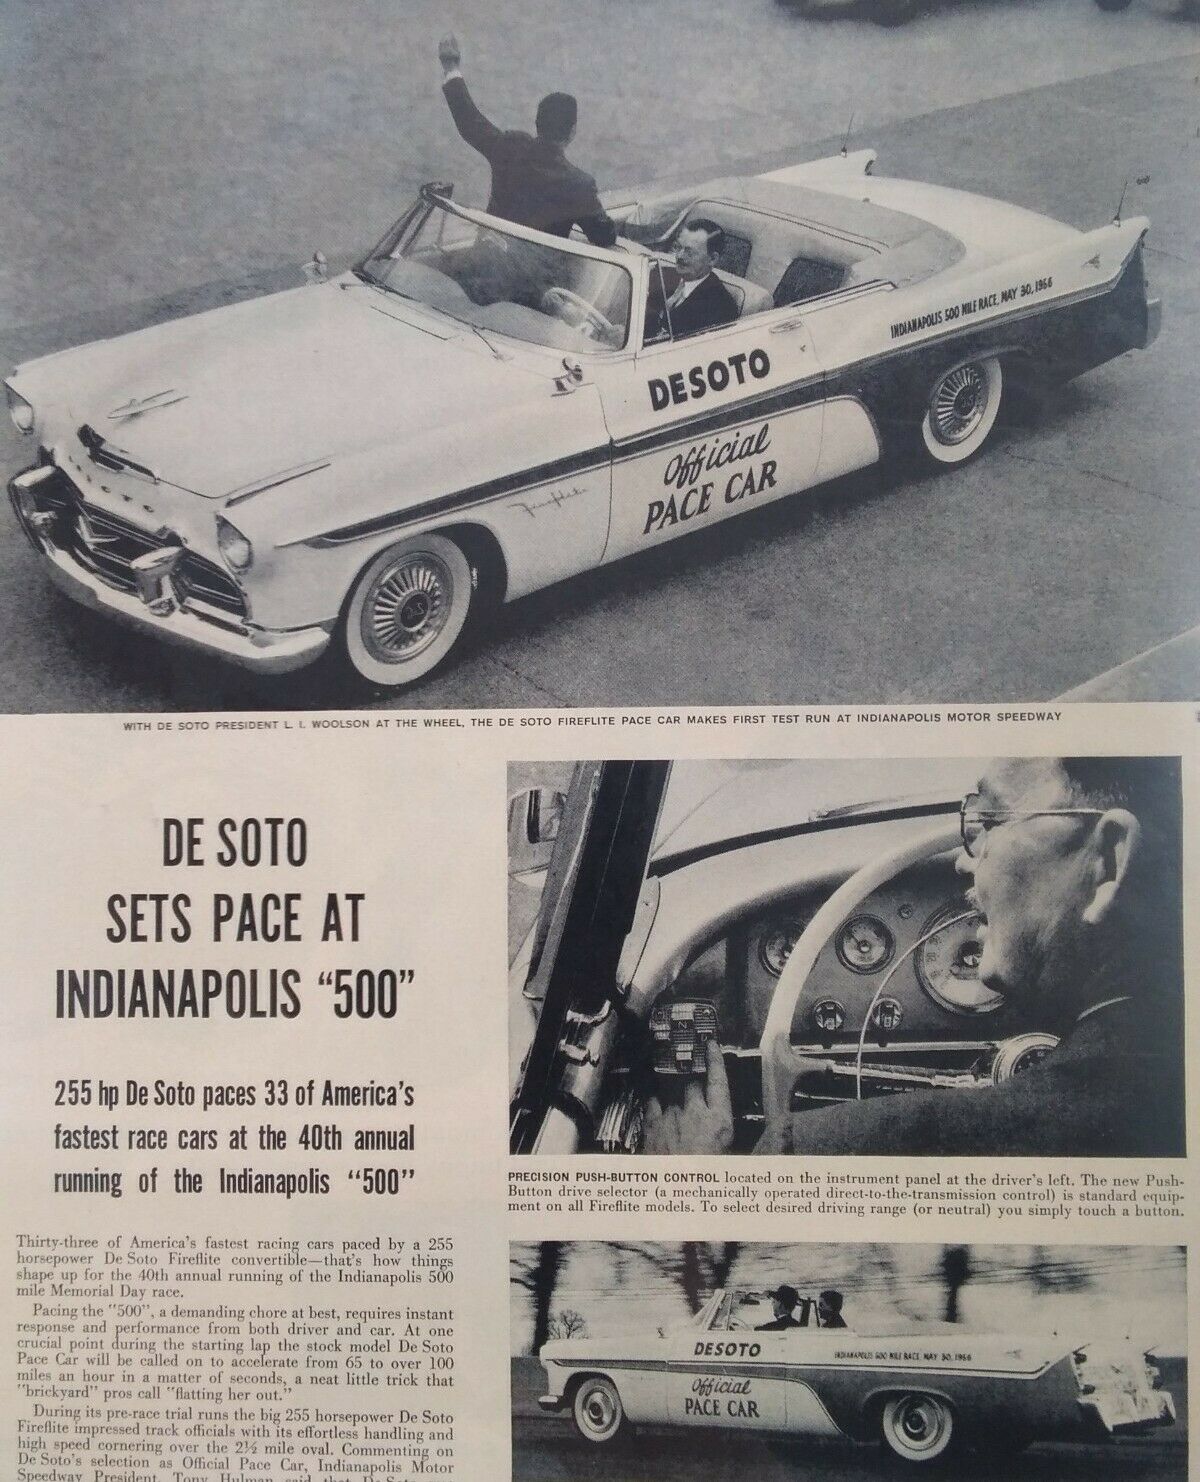 Desoto Print Ad Original Rare Vtg 1950s Fireflite Chrysler Convertible Indy 500